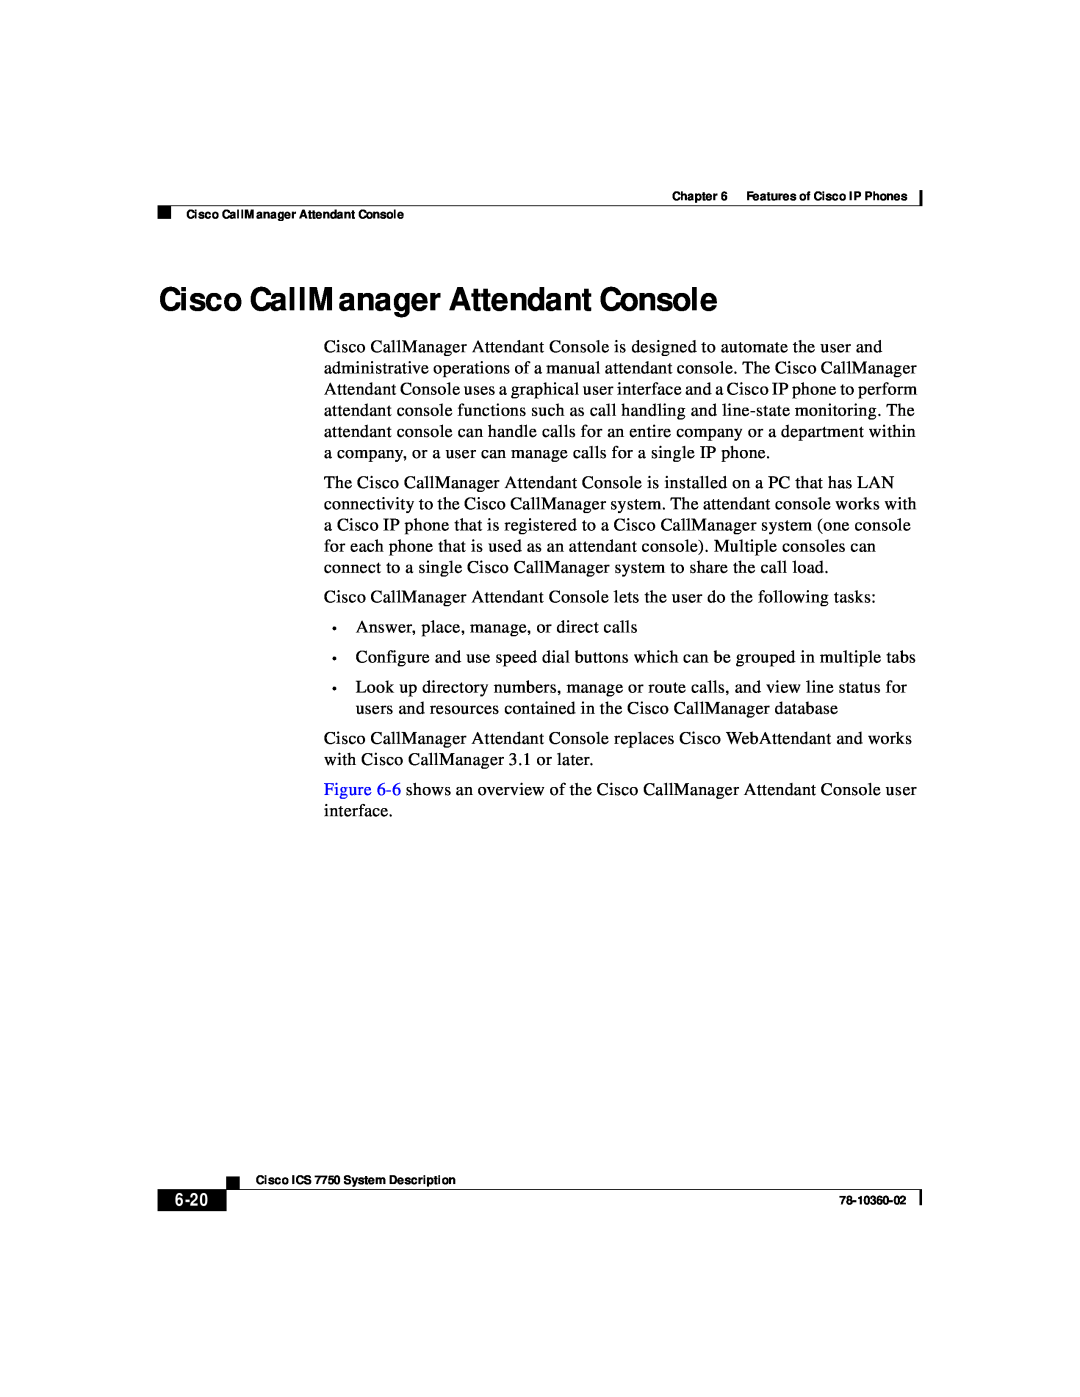 Cisco Systems ICS-7750 manual Cisco CallManager Attendant Console, 6-20 